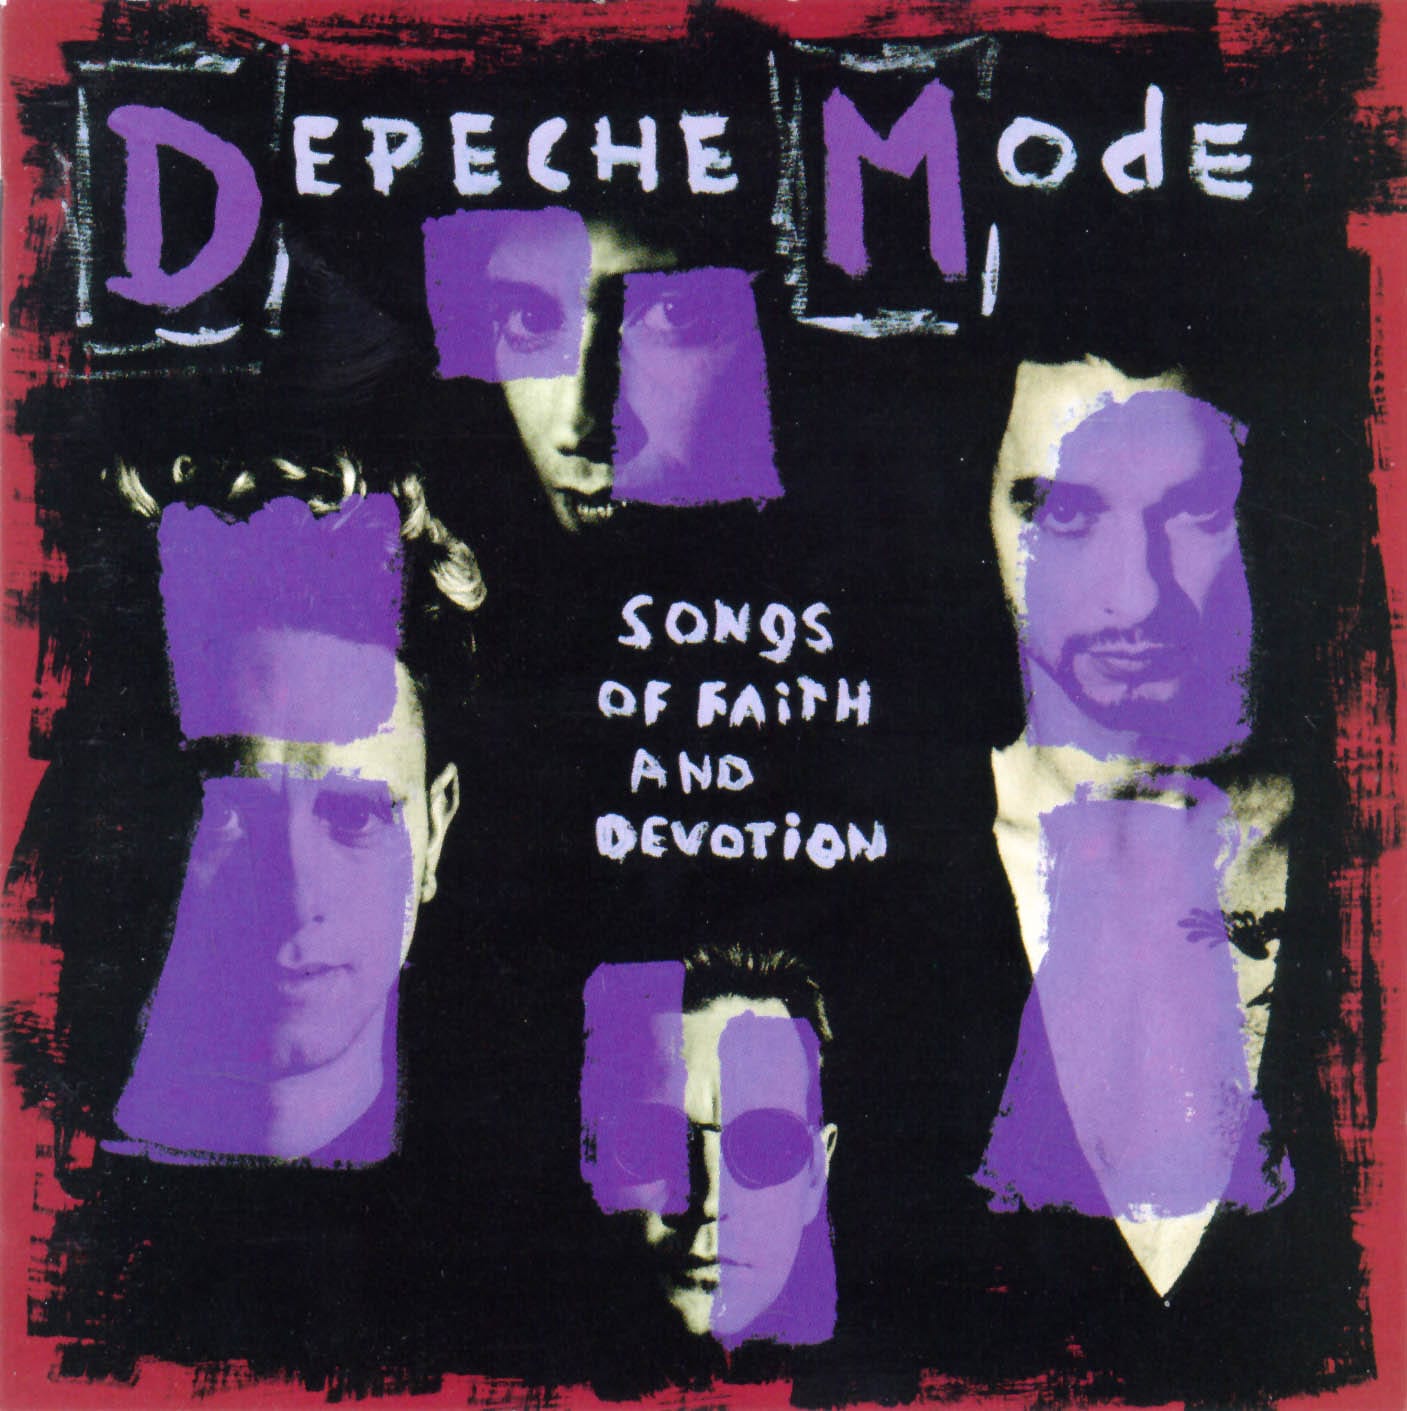 Depeche Mode "Songs of Faith and Devotion" LP